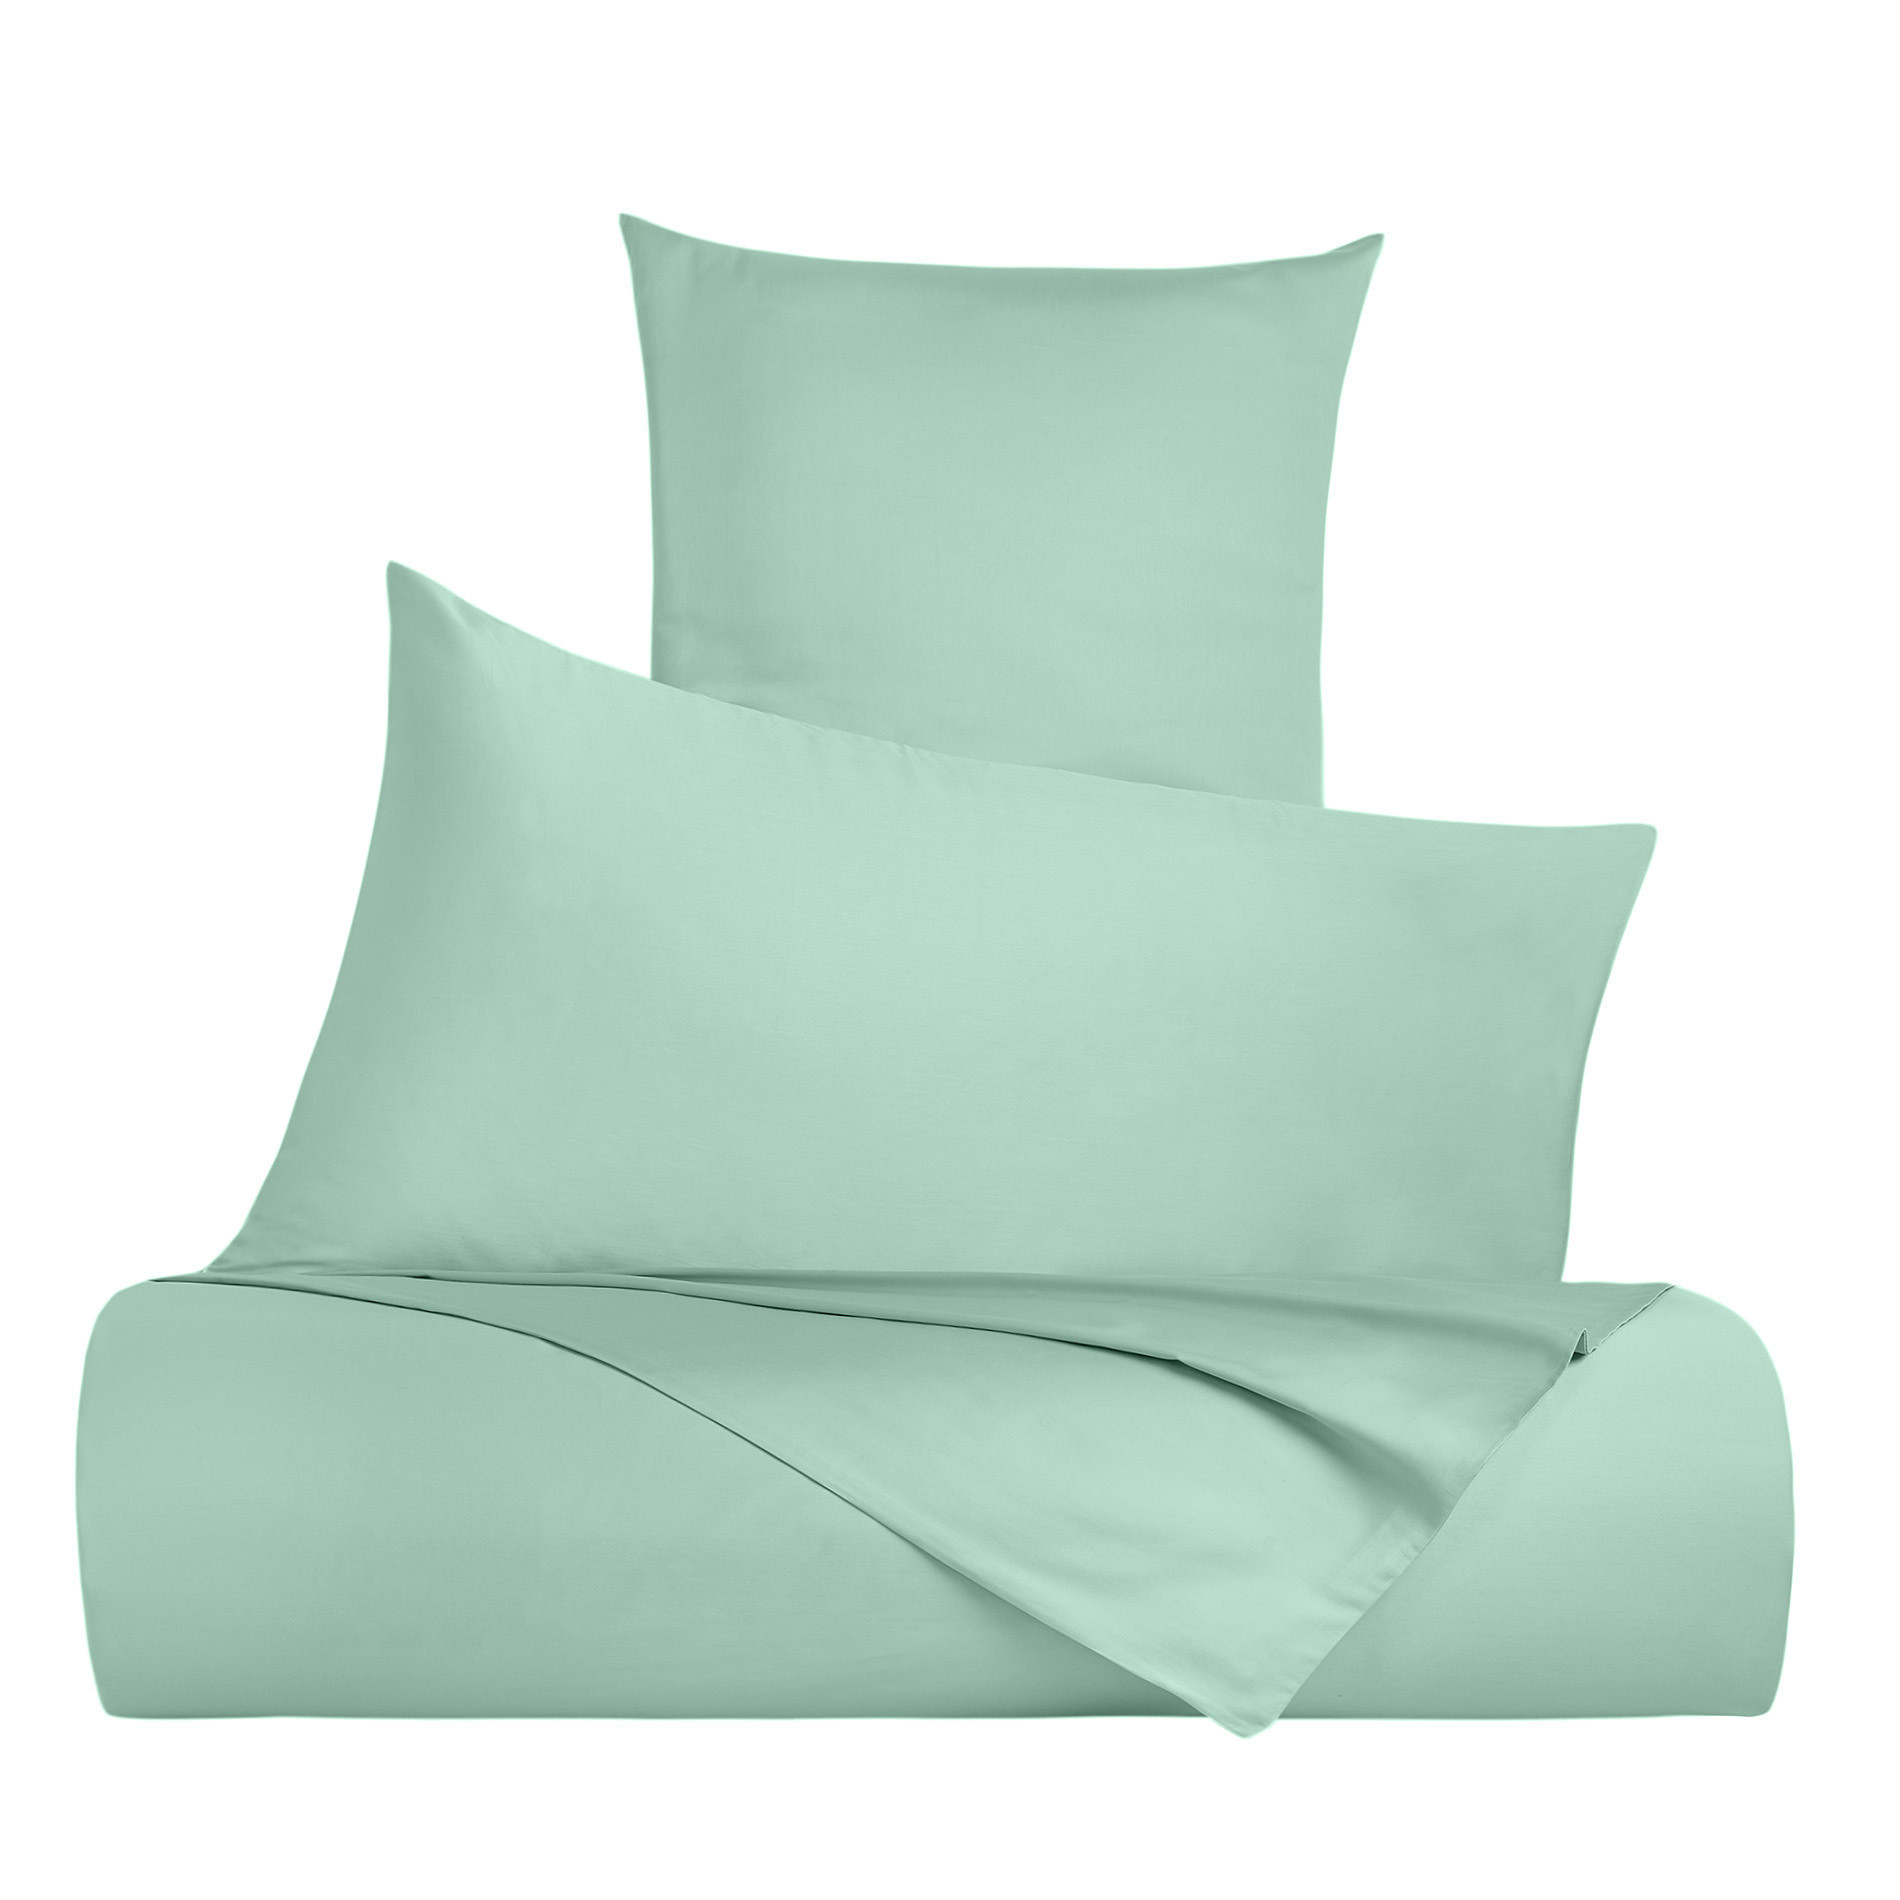 Zefiro bed linen set in 100% cotton satin, Teal, large image number 0